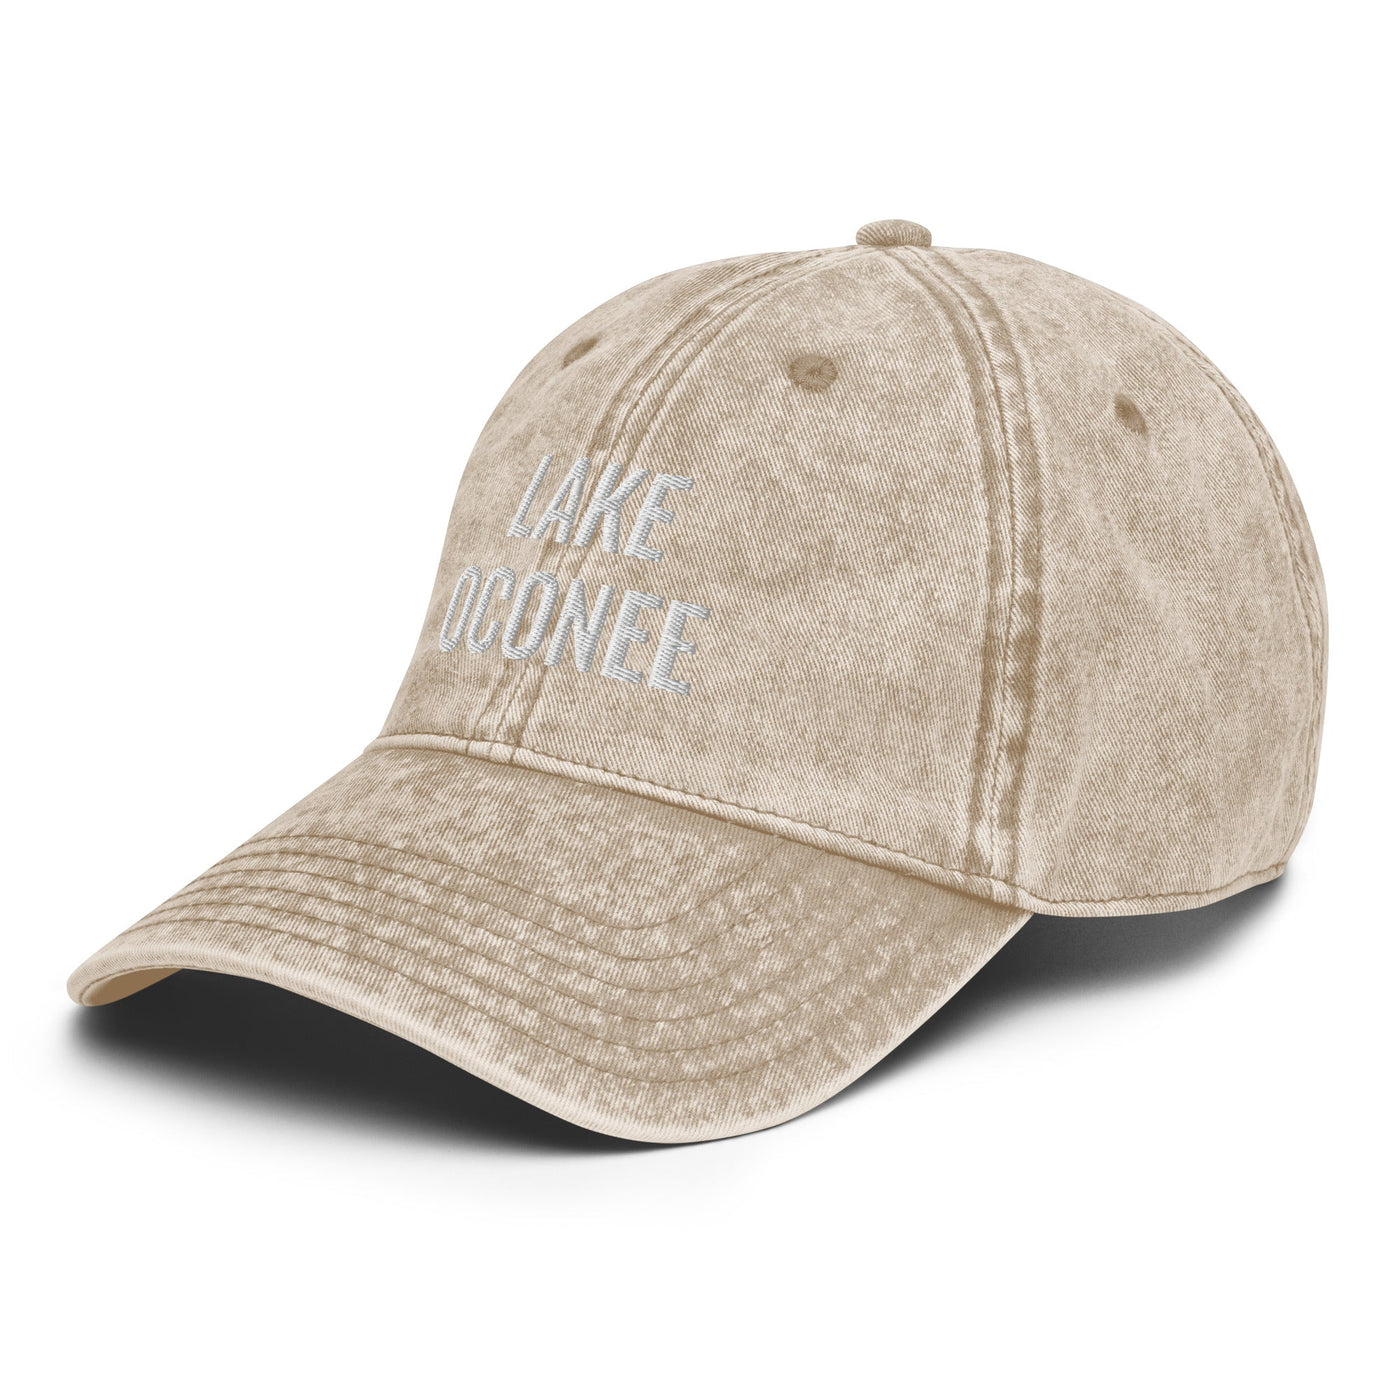 Lake Oconee Hat - Ezra's Clothing